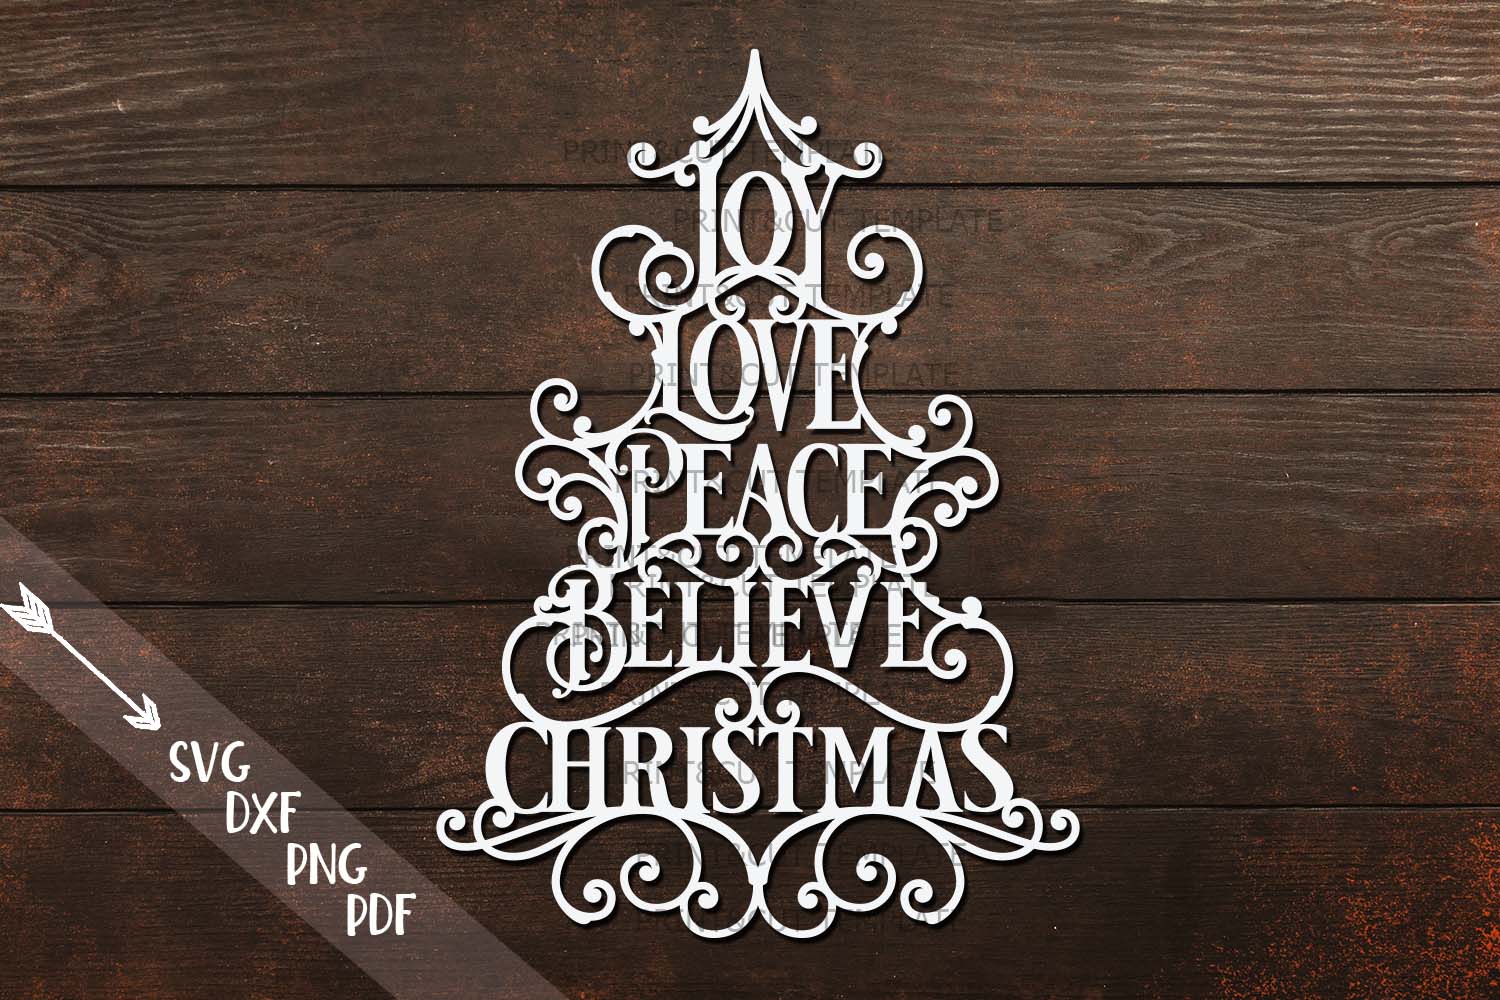 Joy Love Peace Believe Christmas svg dxf pdf cut template ...